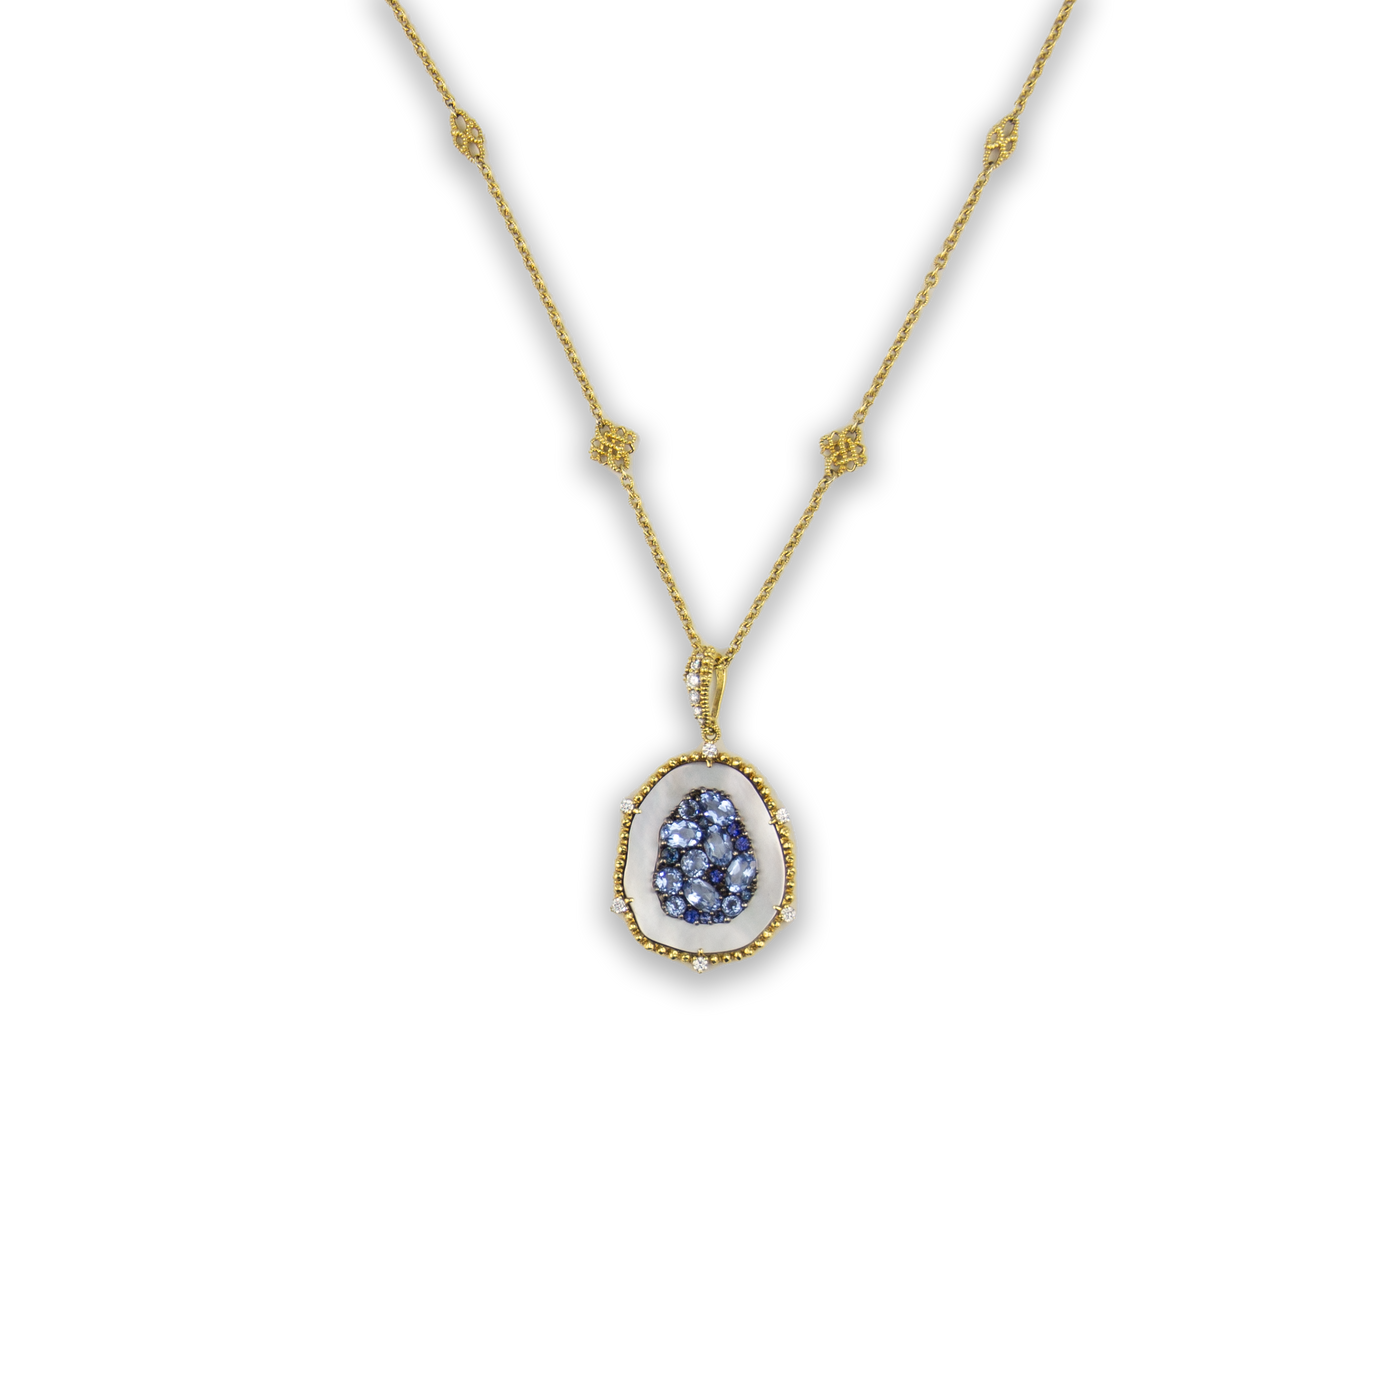 Judith Ripka 18K Yellow Gold Quartz & Sapphire MOP Pendant Necklace